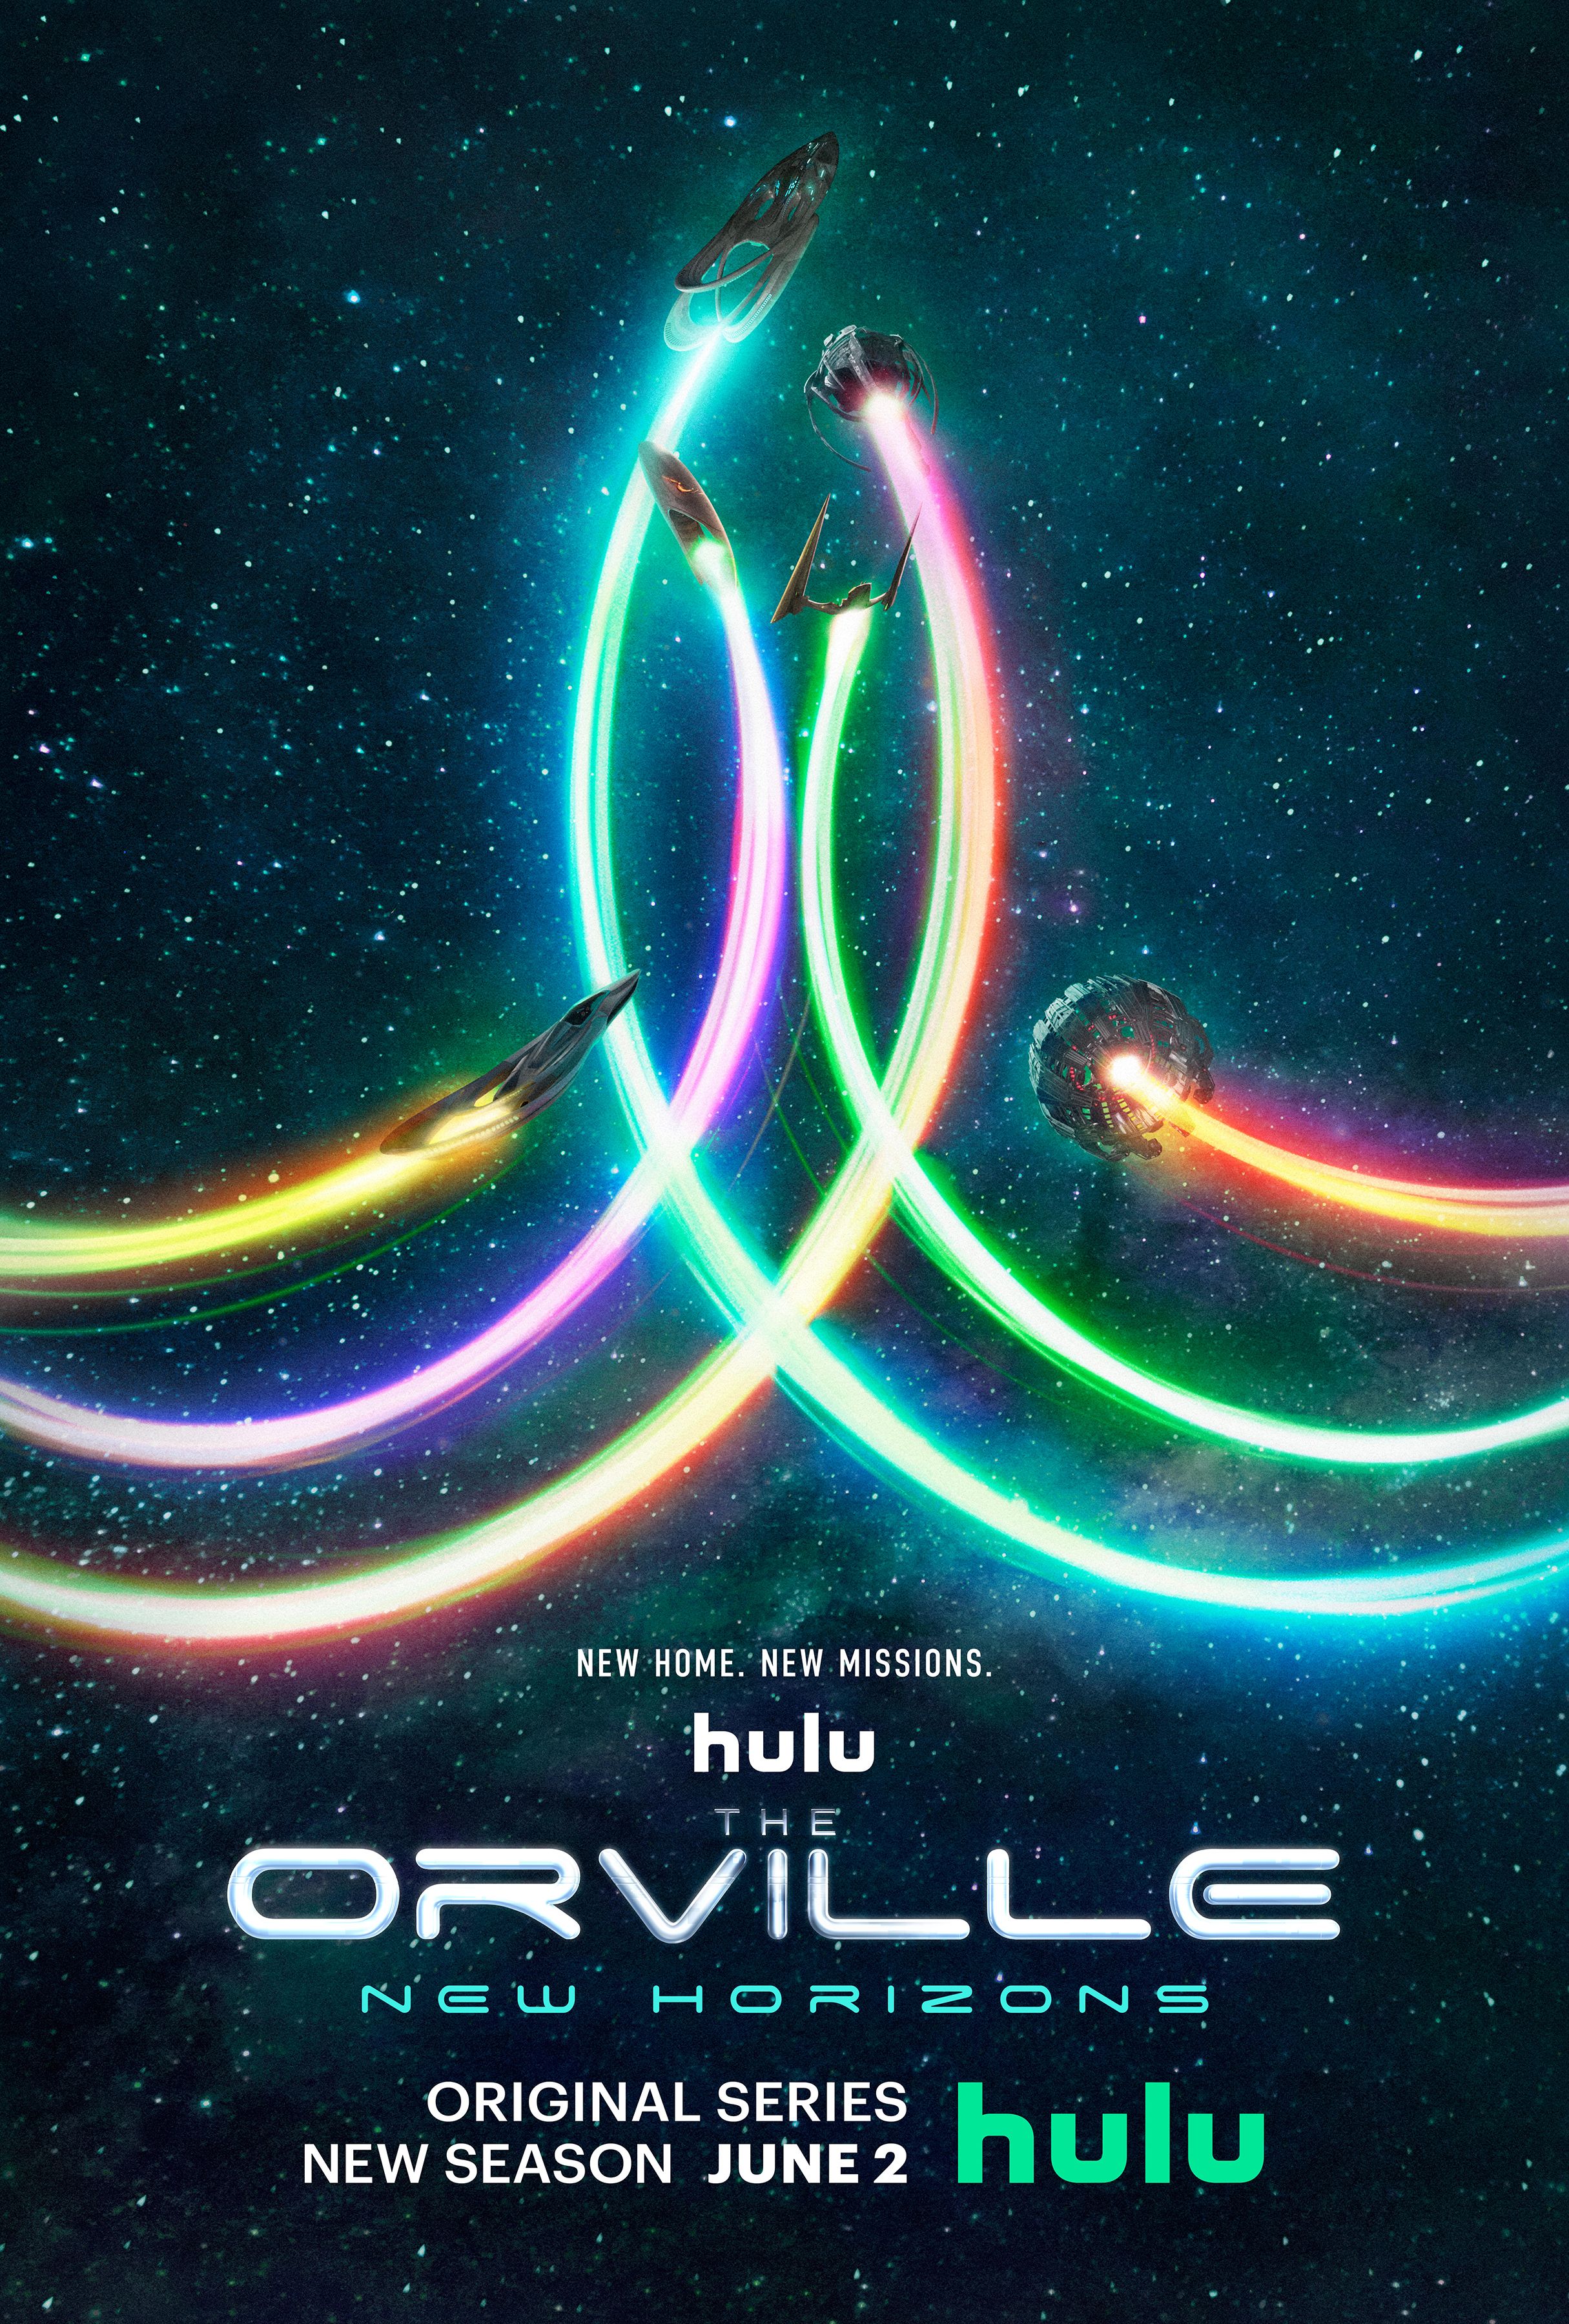 he-orville-new-horizons-poster